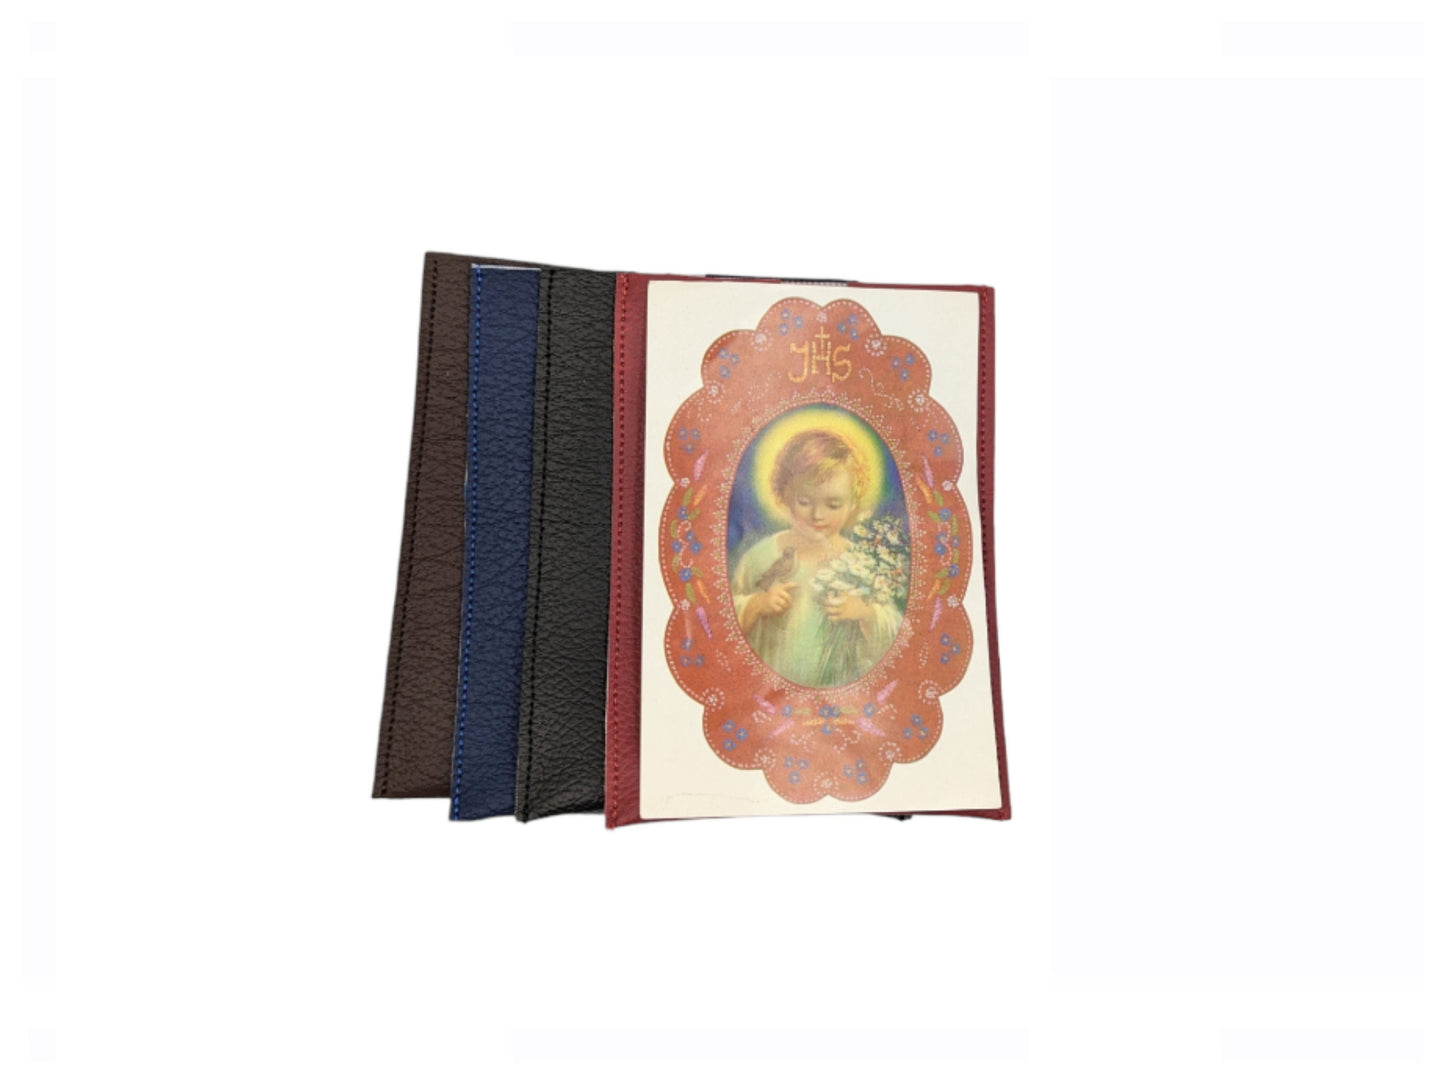 Individual Holy Card Pocket, leatherette, leatherette book case, custom card holder, journal wrap pocket, bible, spiritual reading